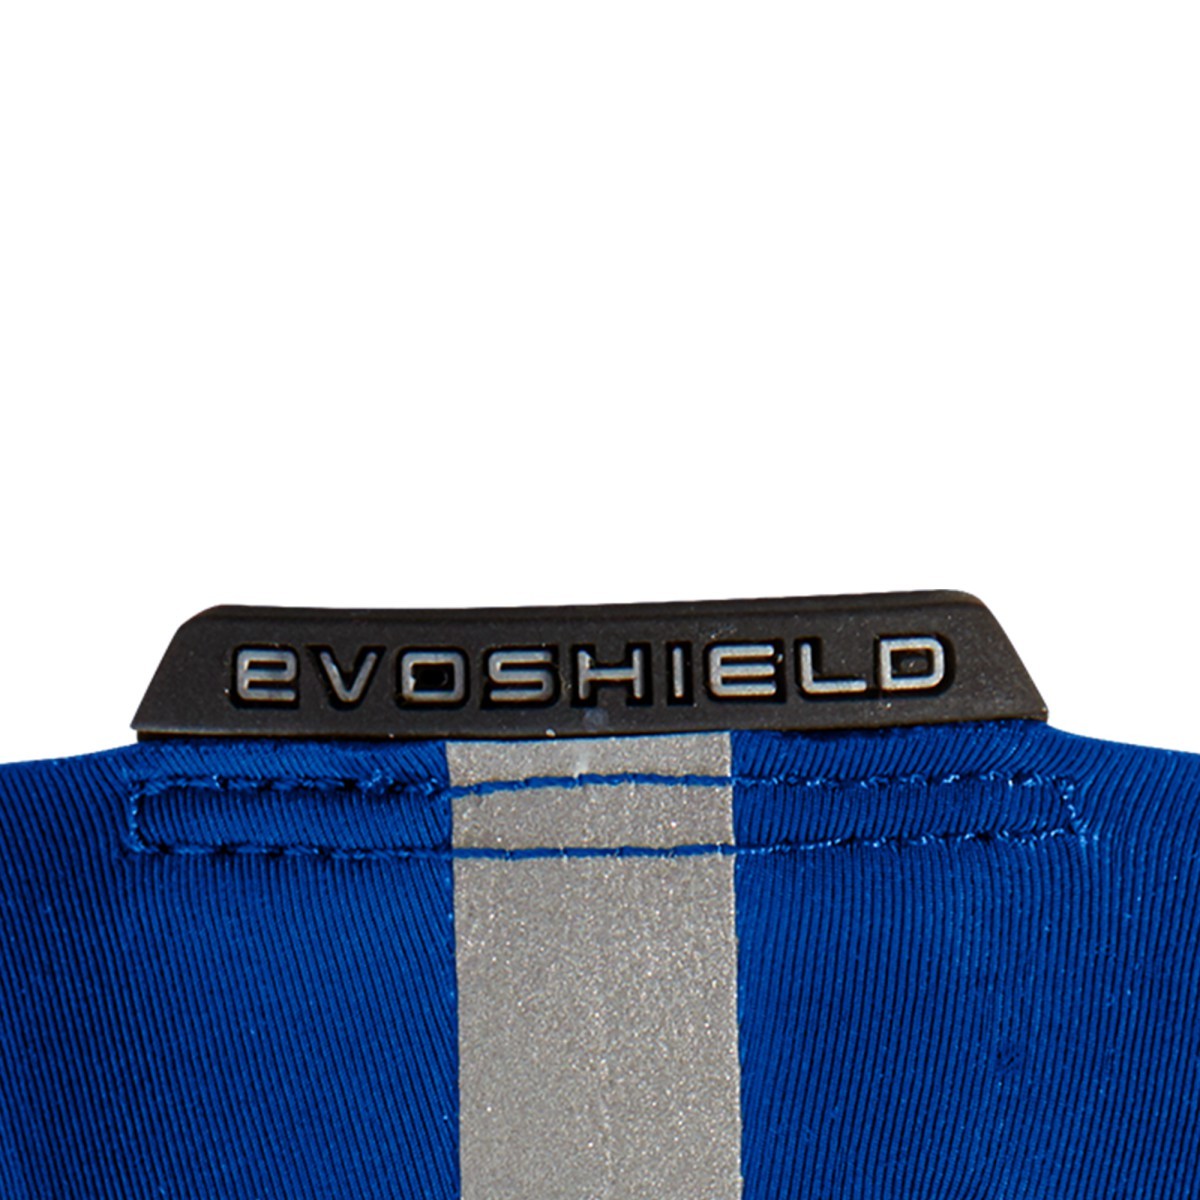 EvoShield A160 Performance Wrist with Strap - XL Green